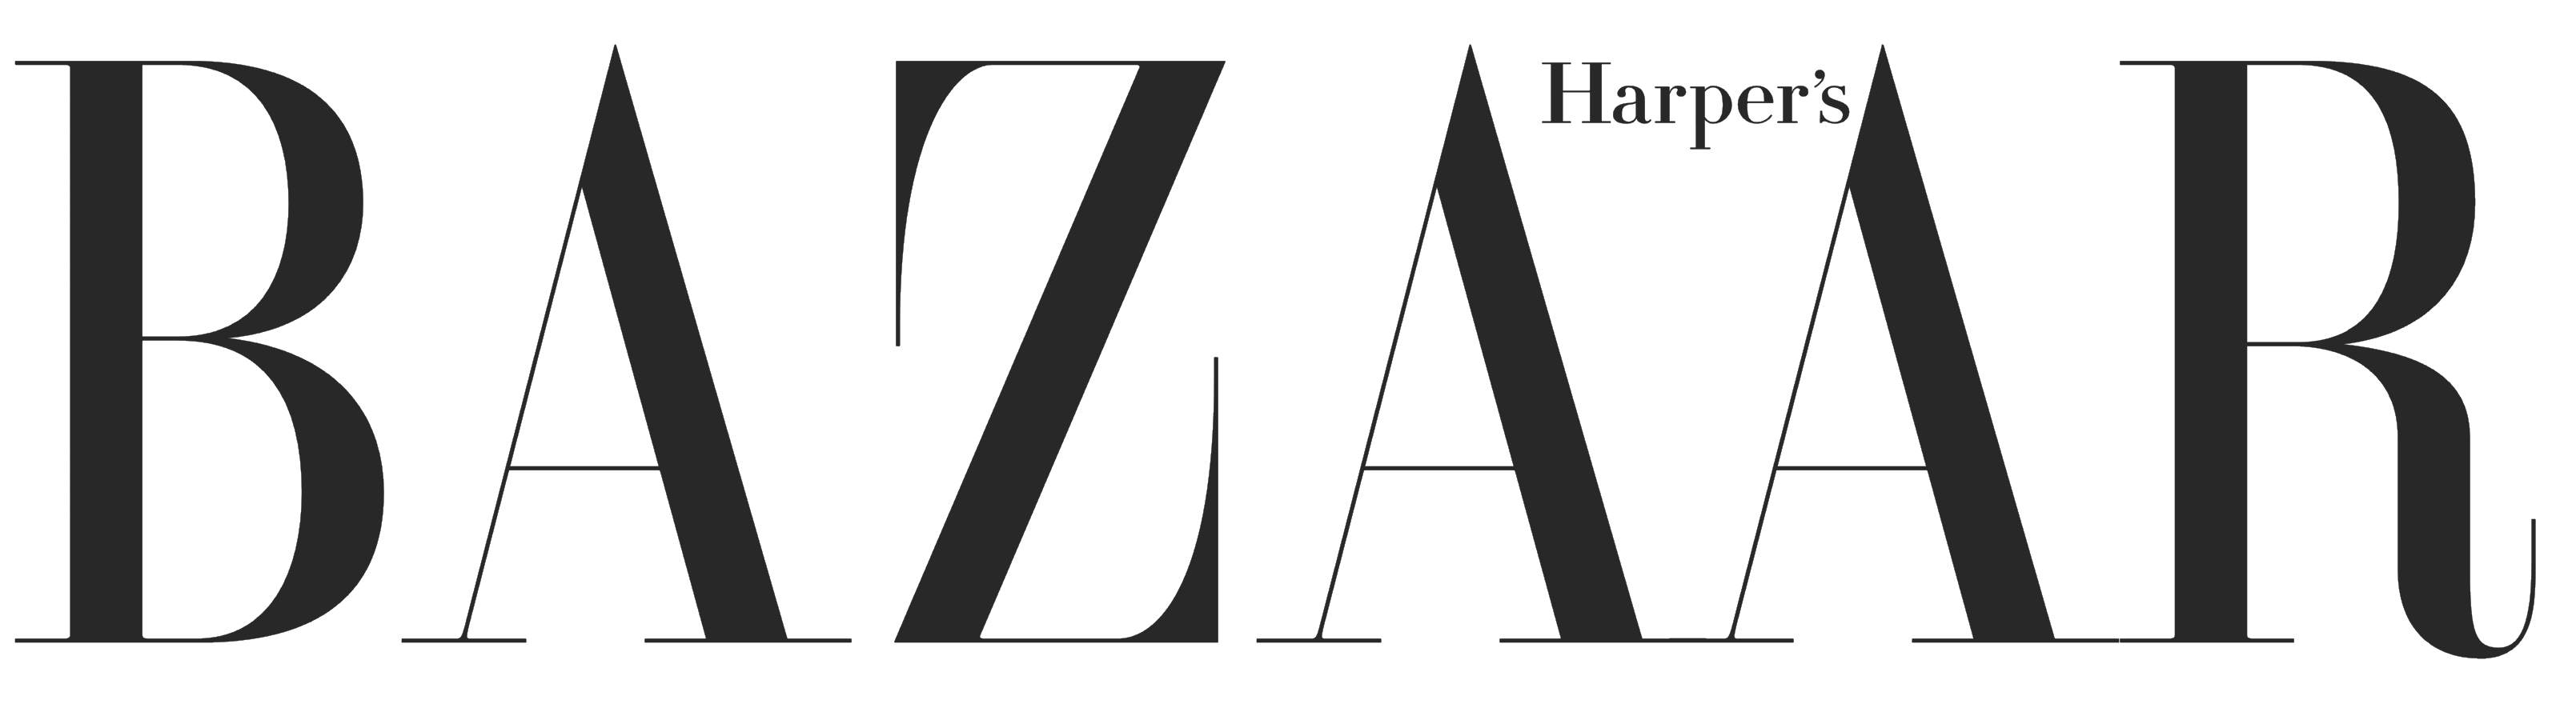 Harper's BAZAR logo